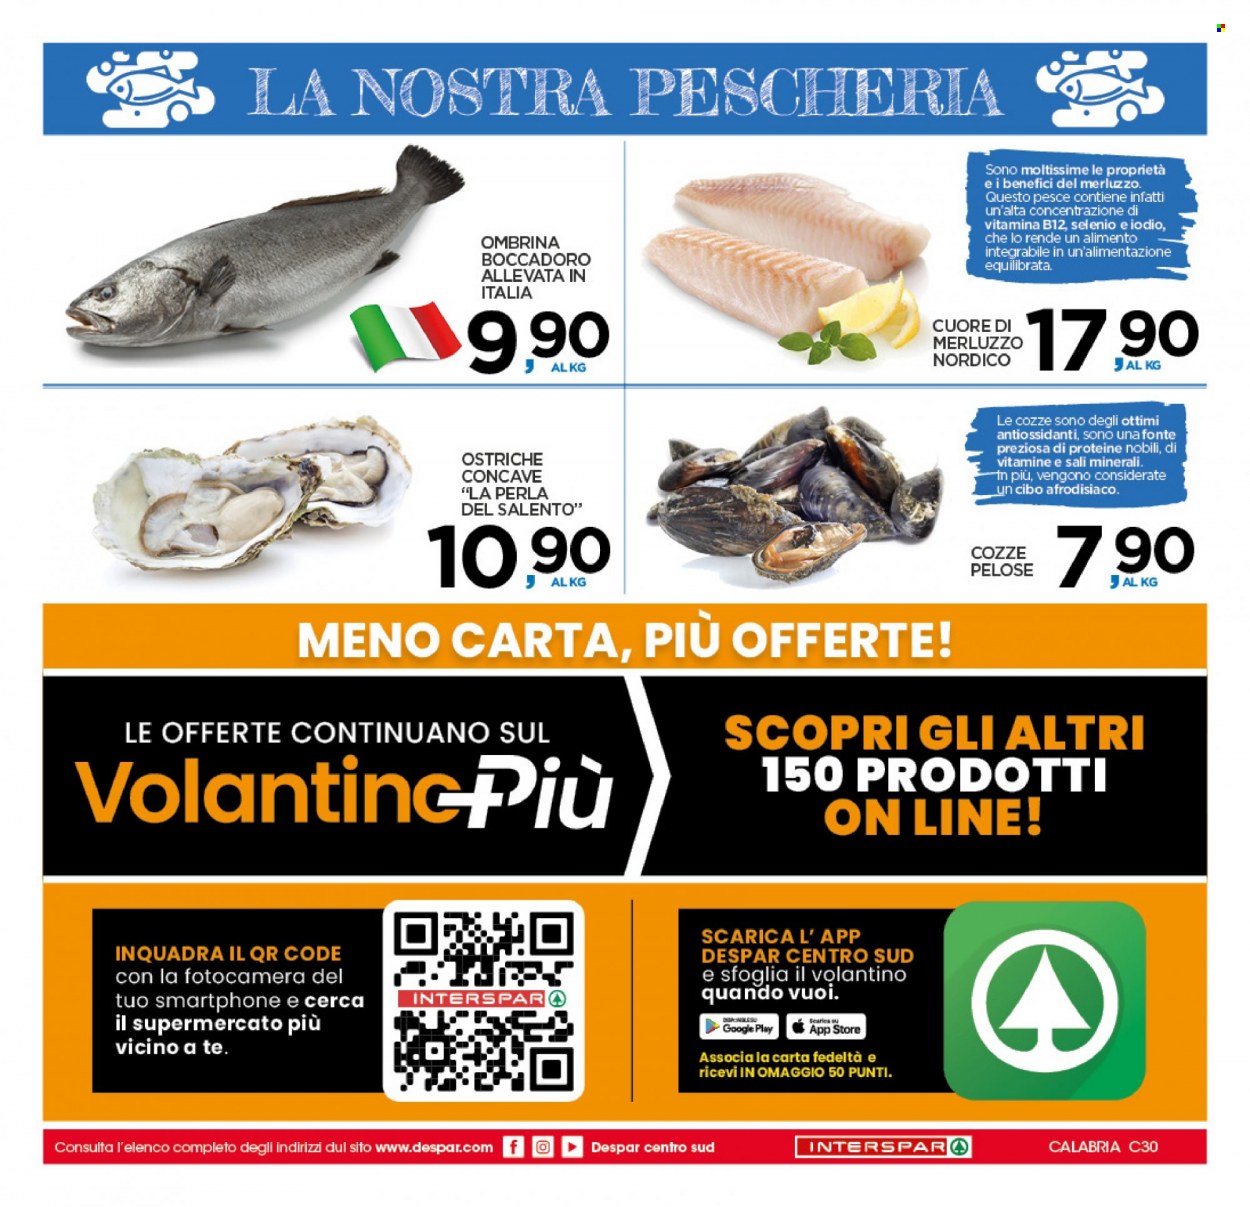 Volantino Interspar - 1.6.2023 - 8.6.2023.